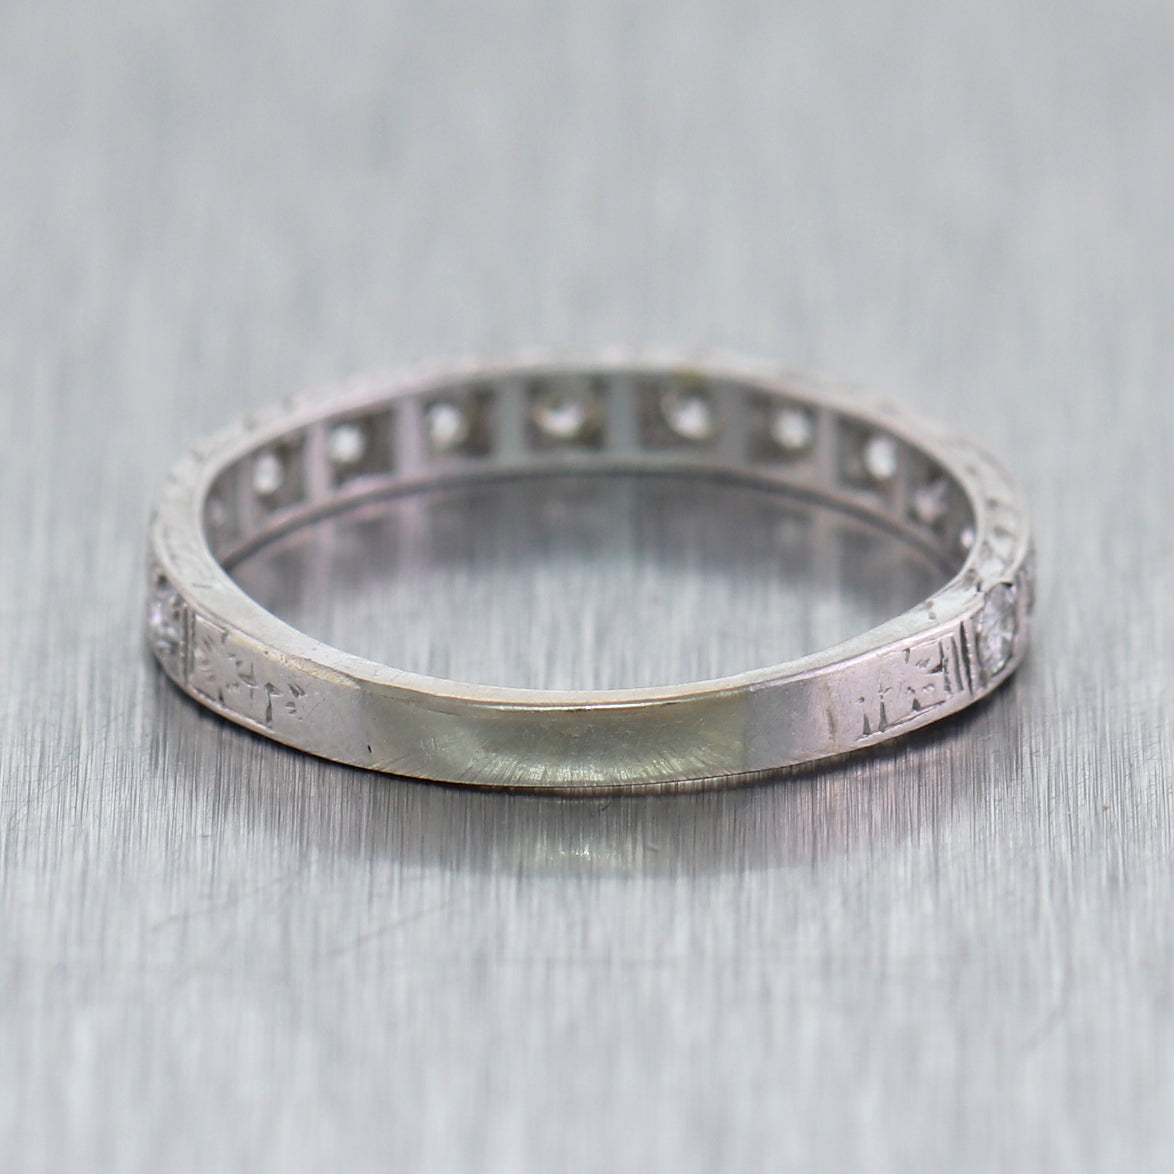 1930's Antique Art Deco 14k White Gold 0.50ctw Diamond Wedding Band Ring